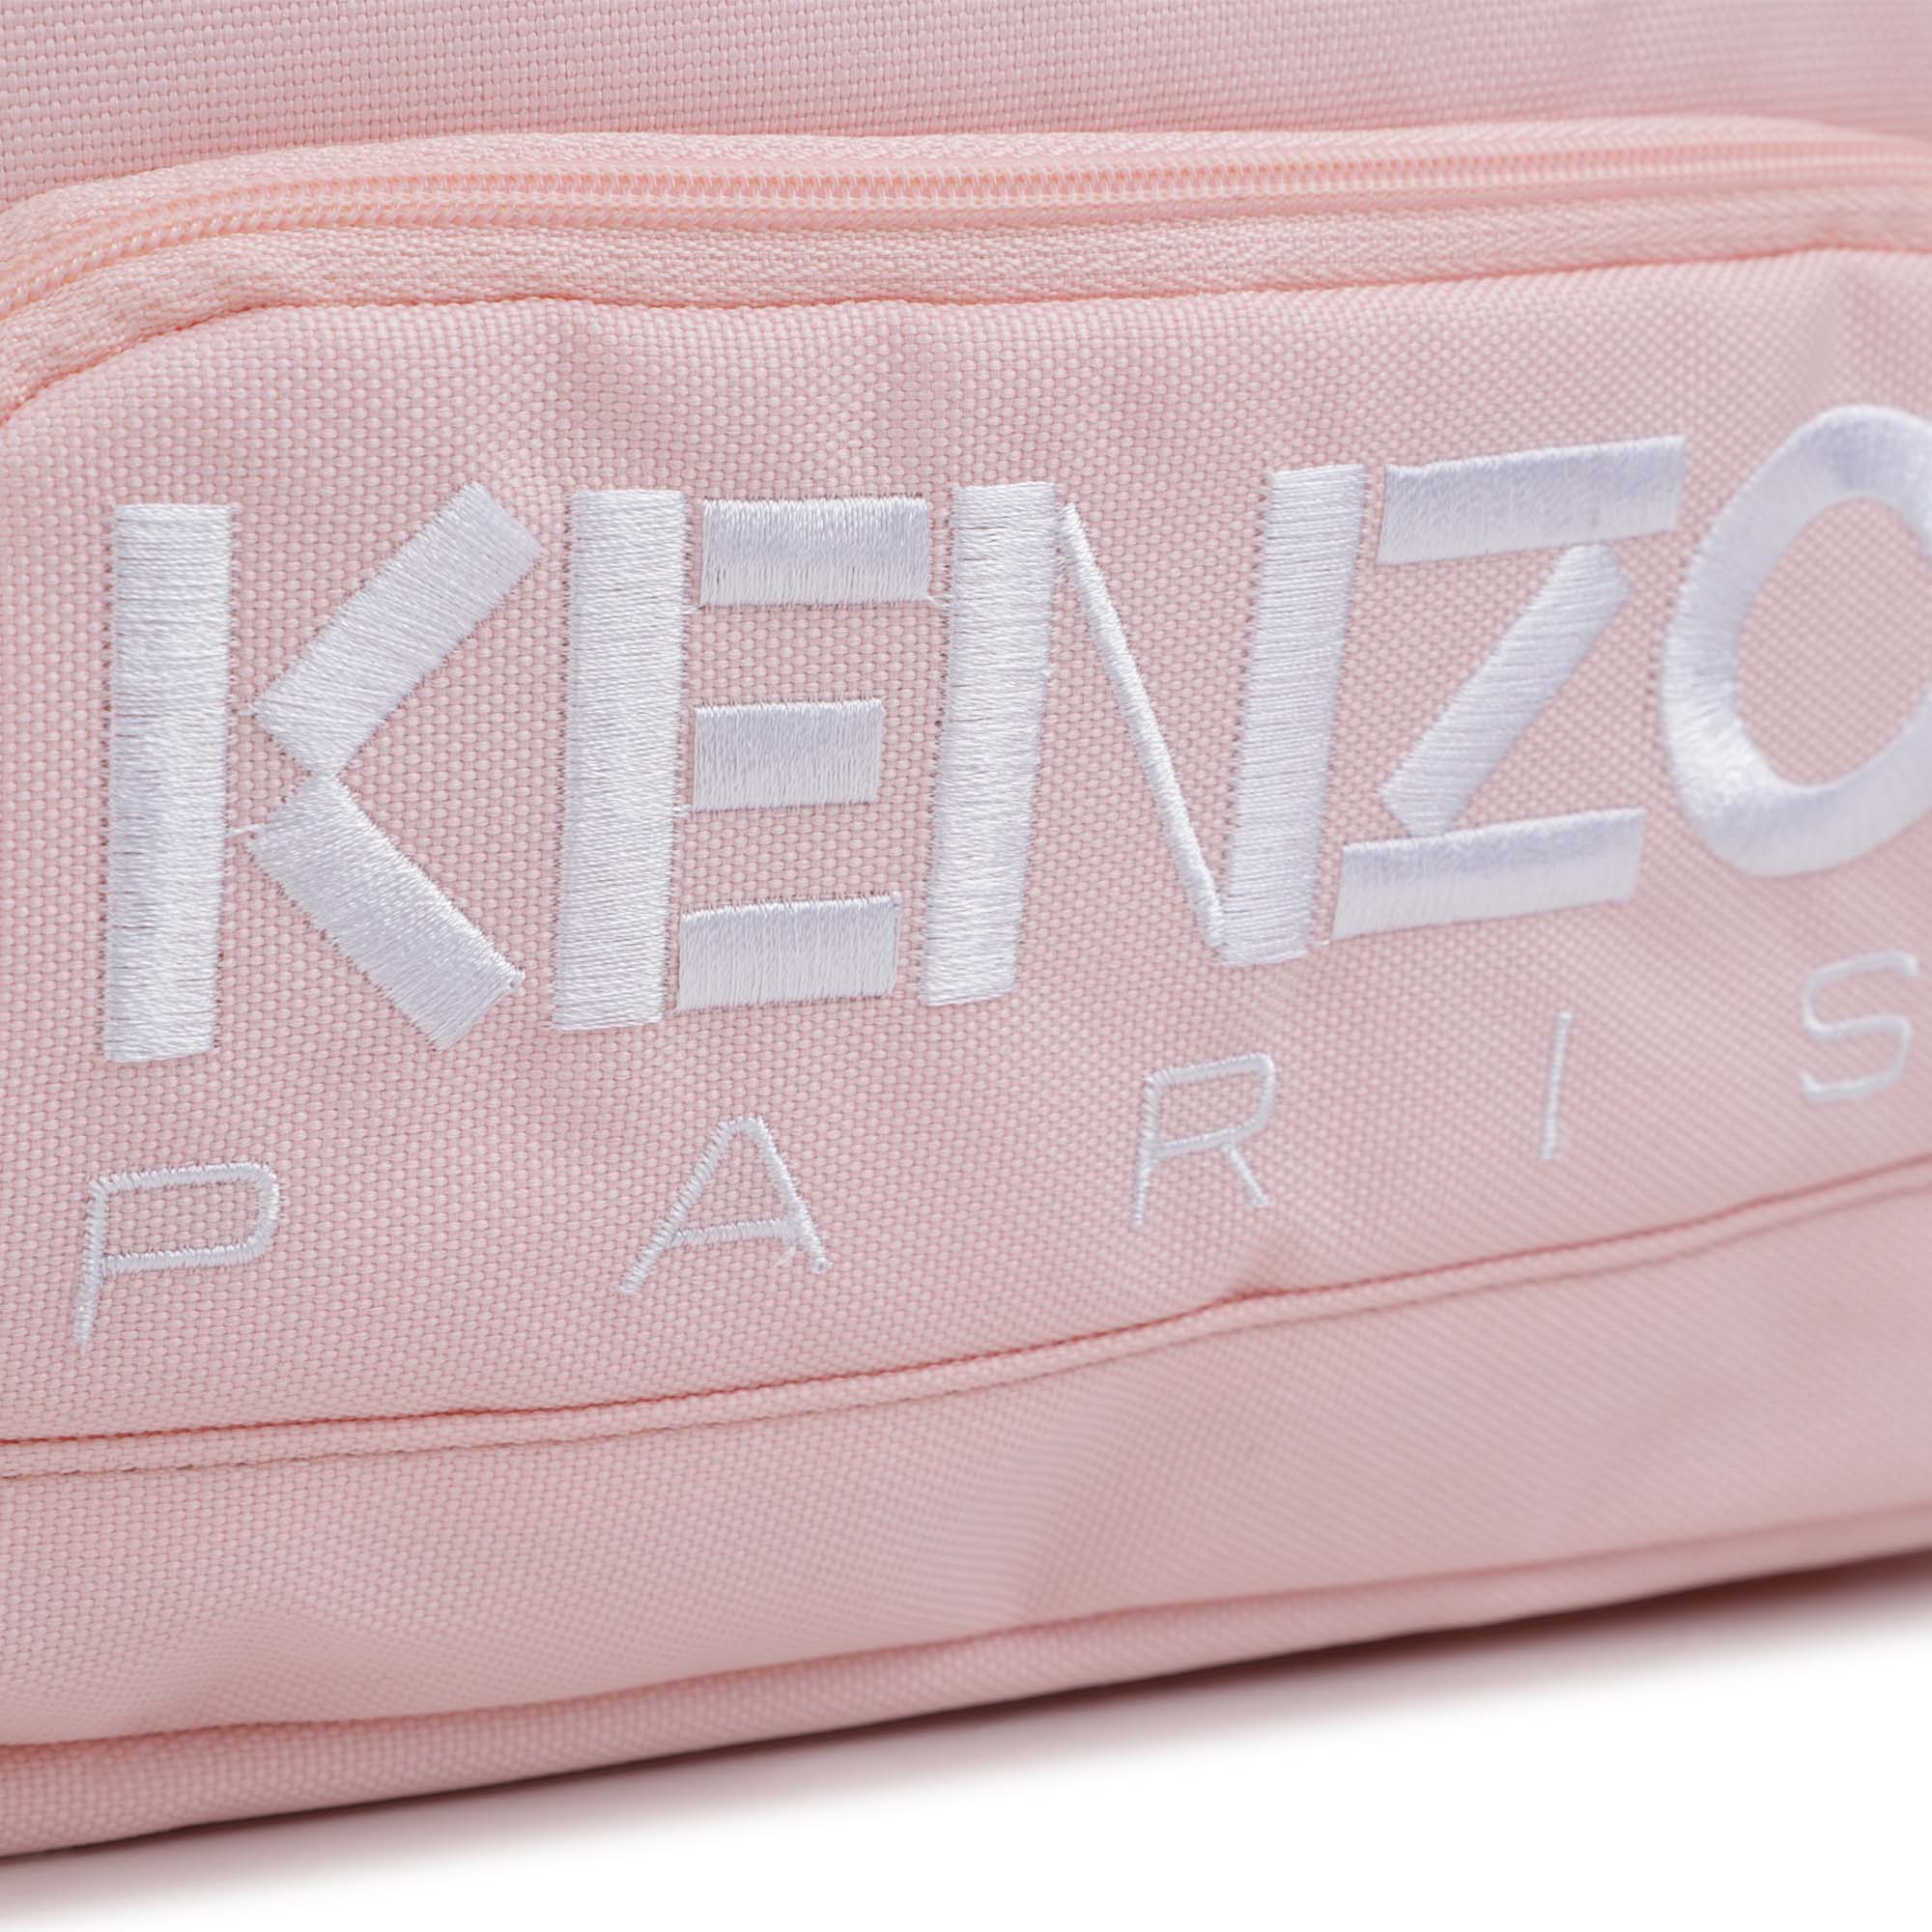 Kotora Embroidered Backpack KENZO KIDS for UNISEX